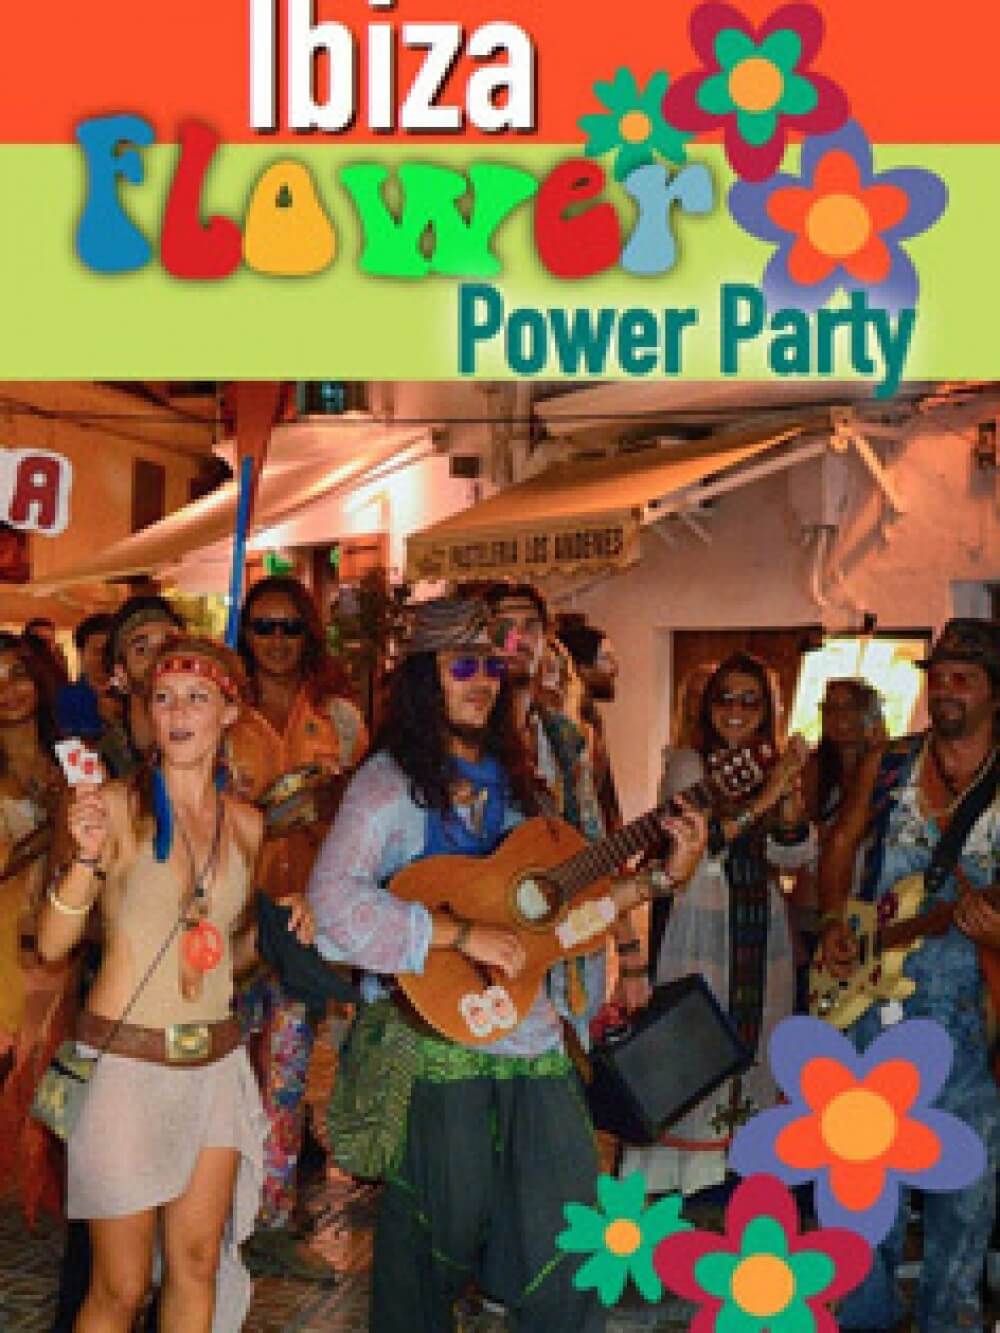 ibiza_flower_power_party_vertical_web